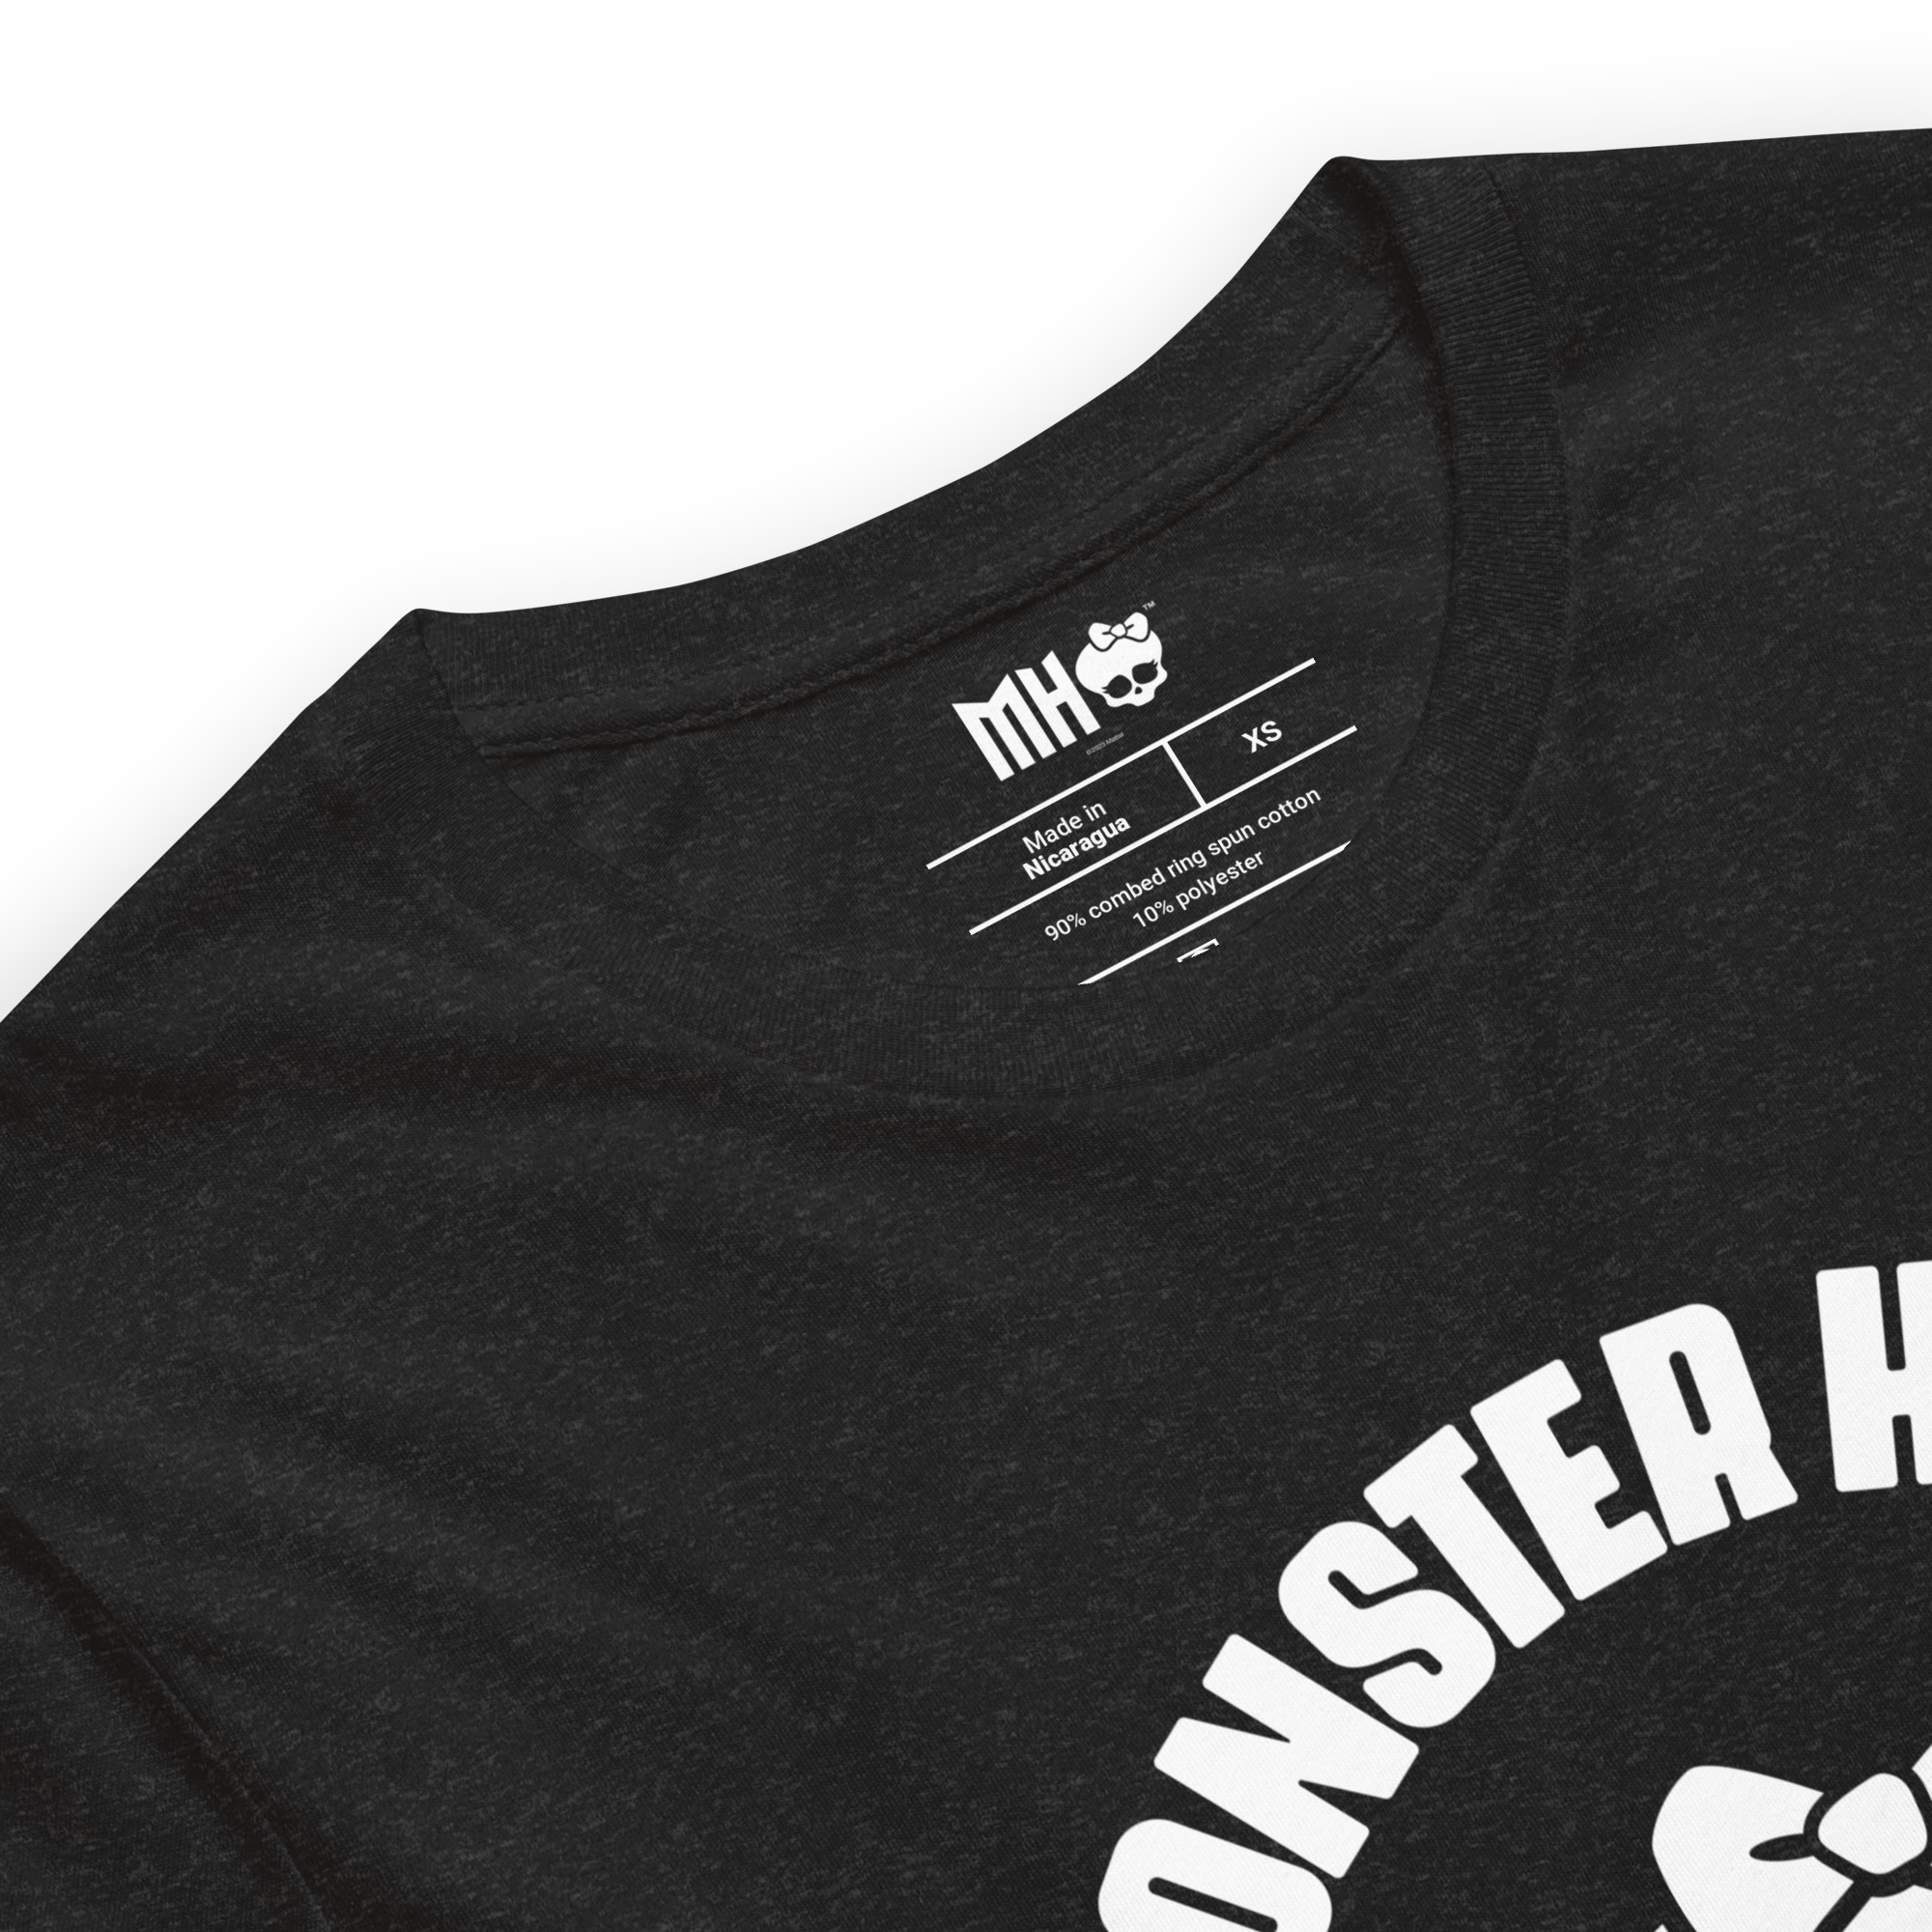 Monster High Fang Club Short Sleeve T-Shirt in Black Heather